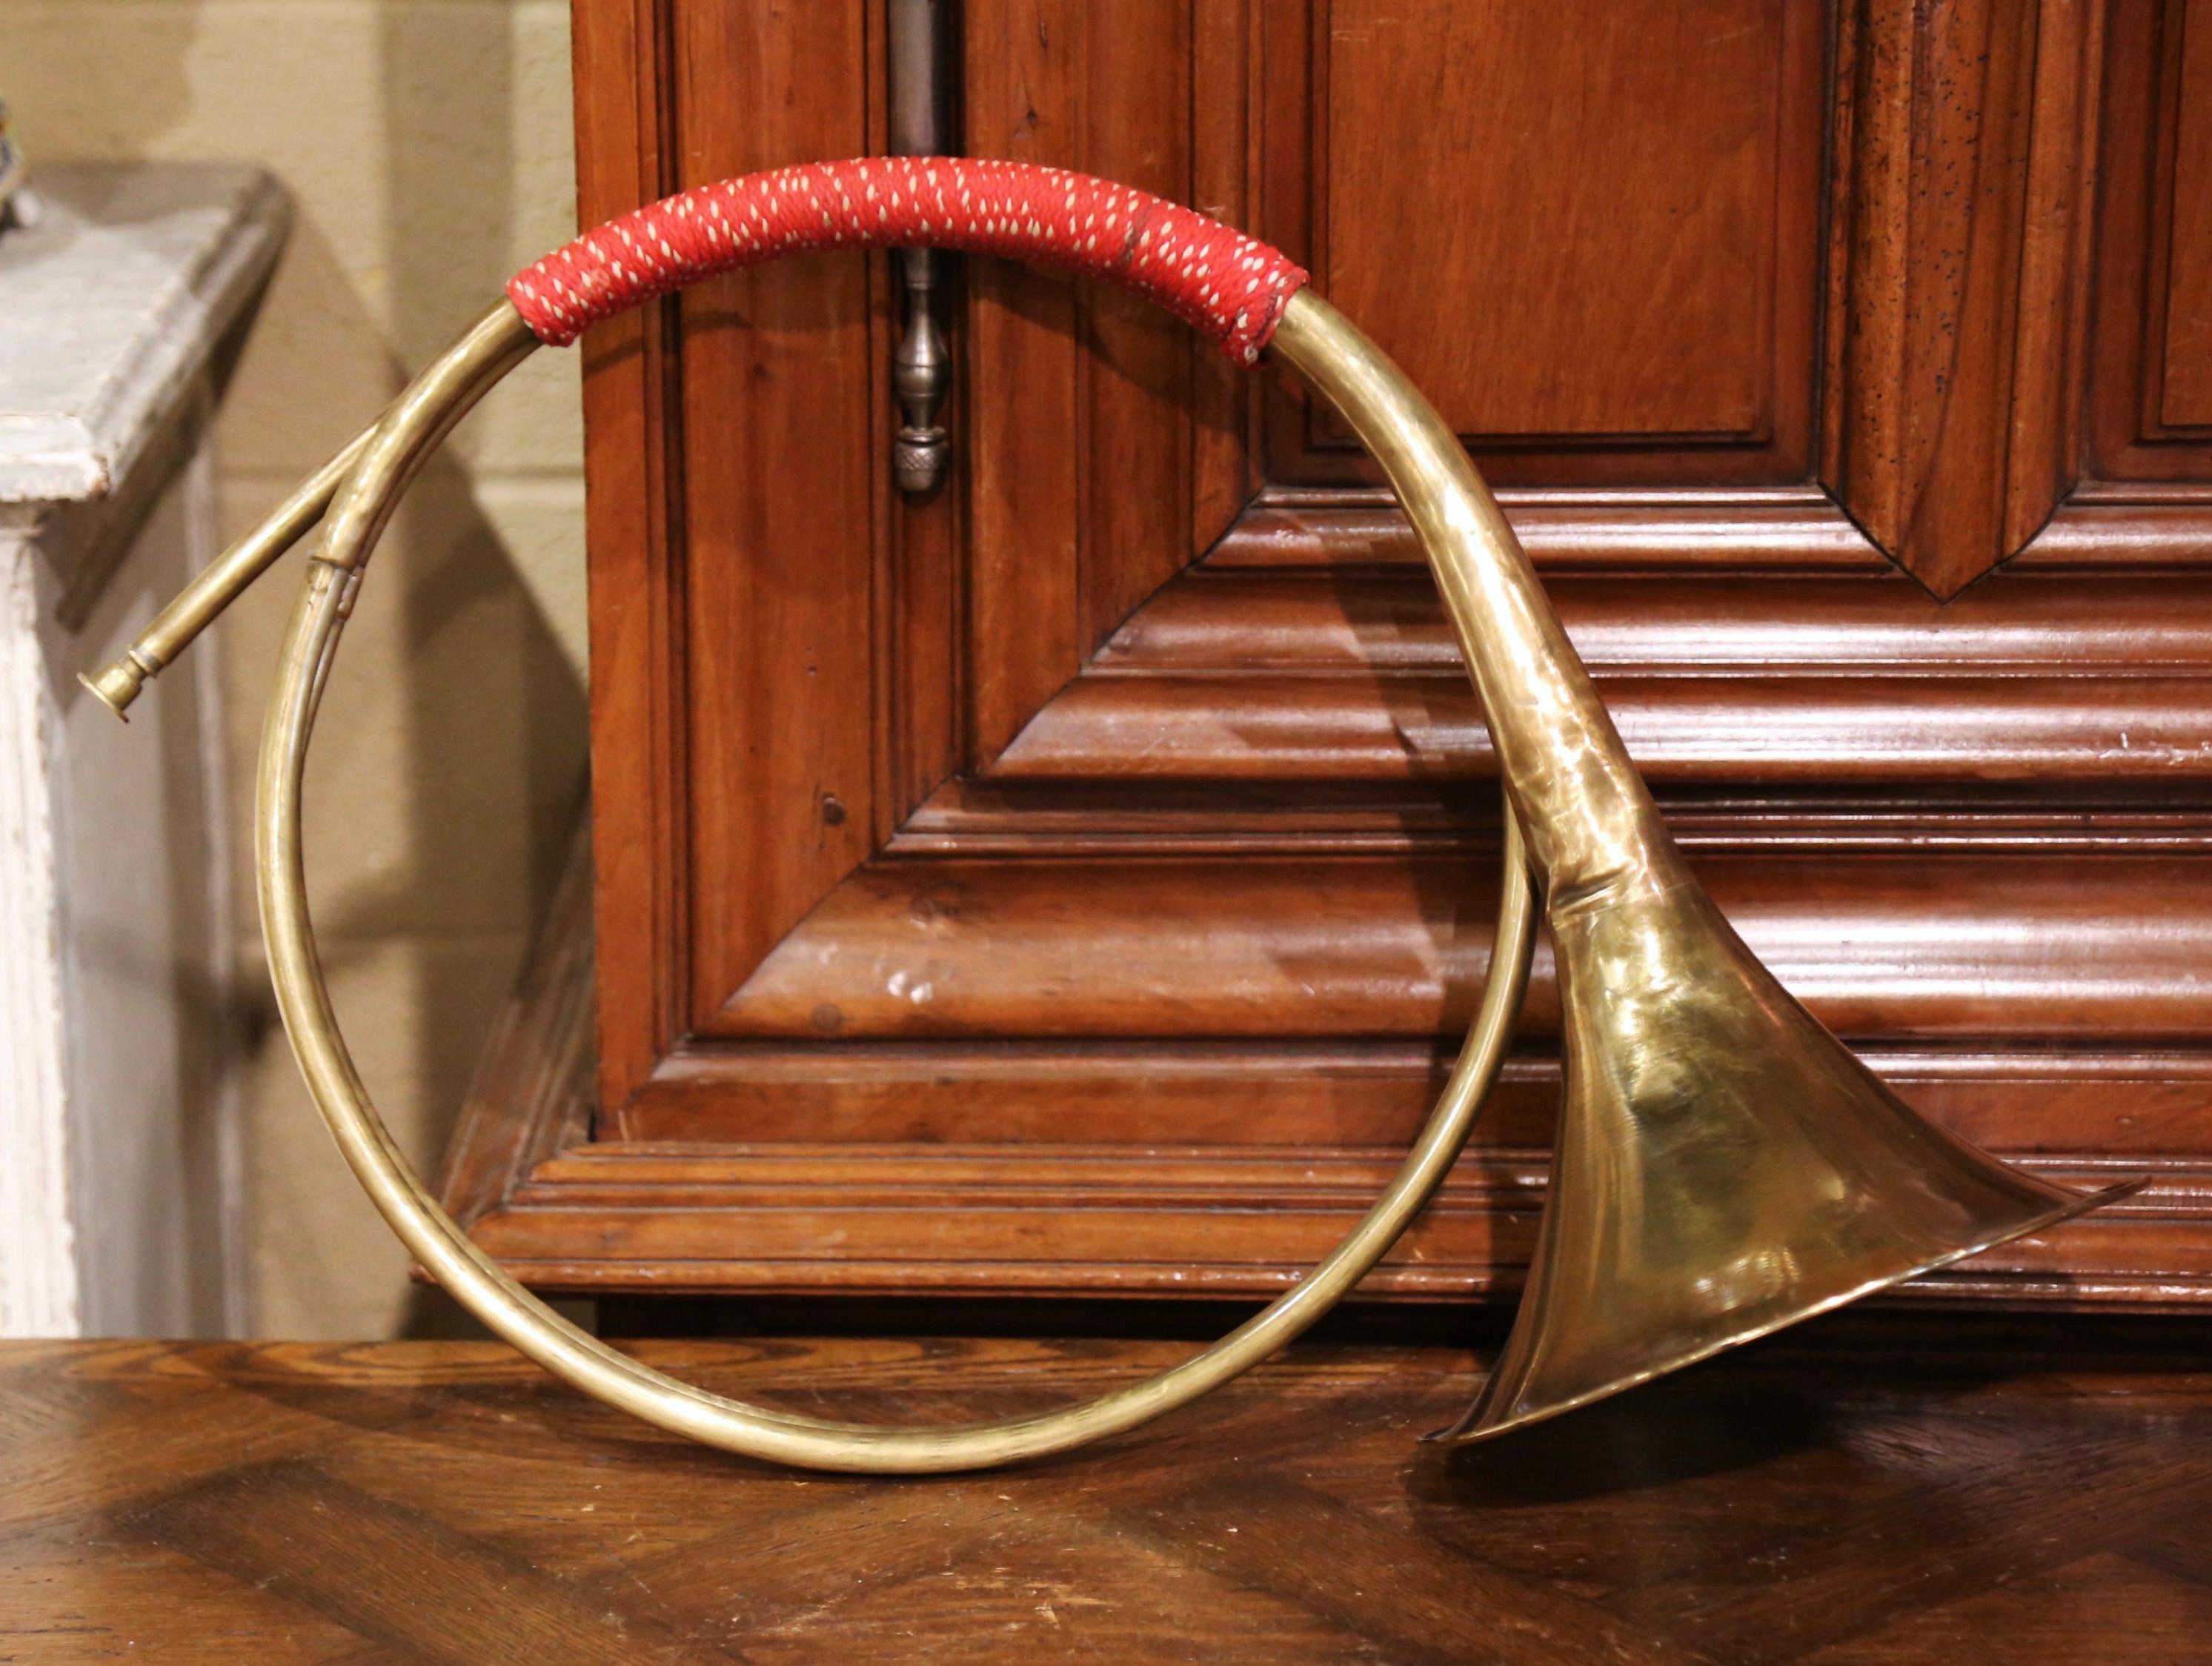 horn instruments